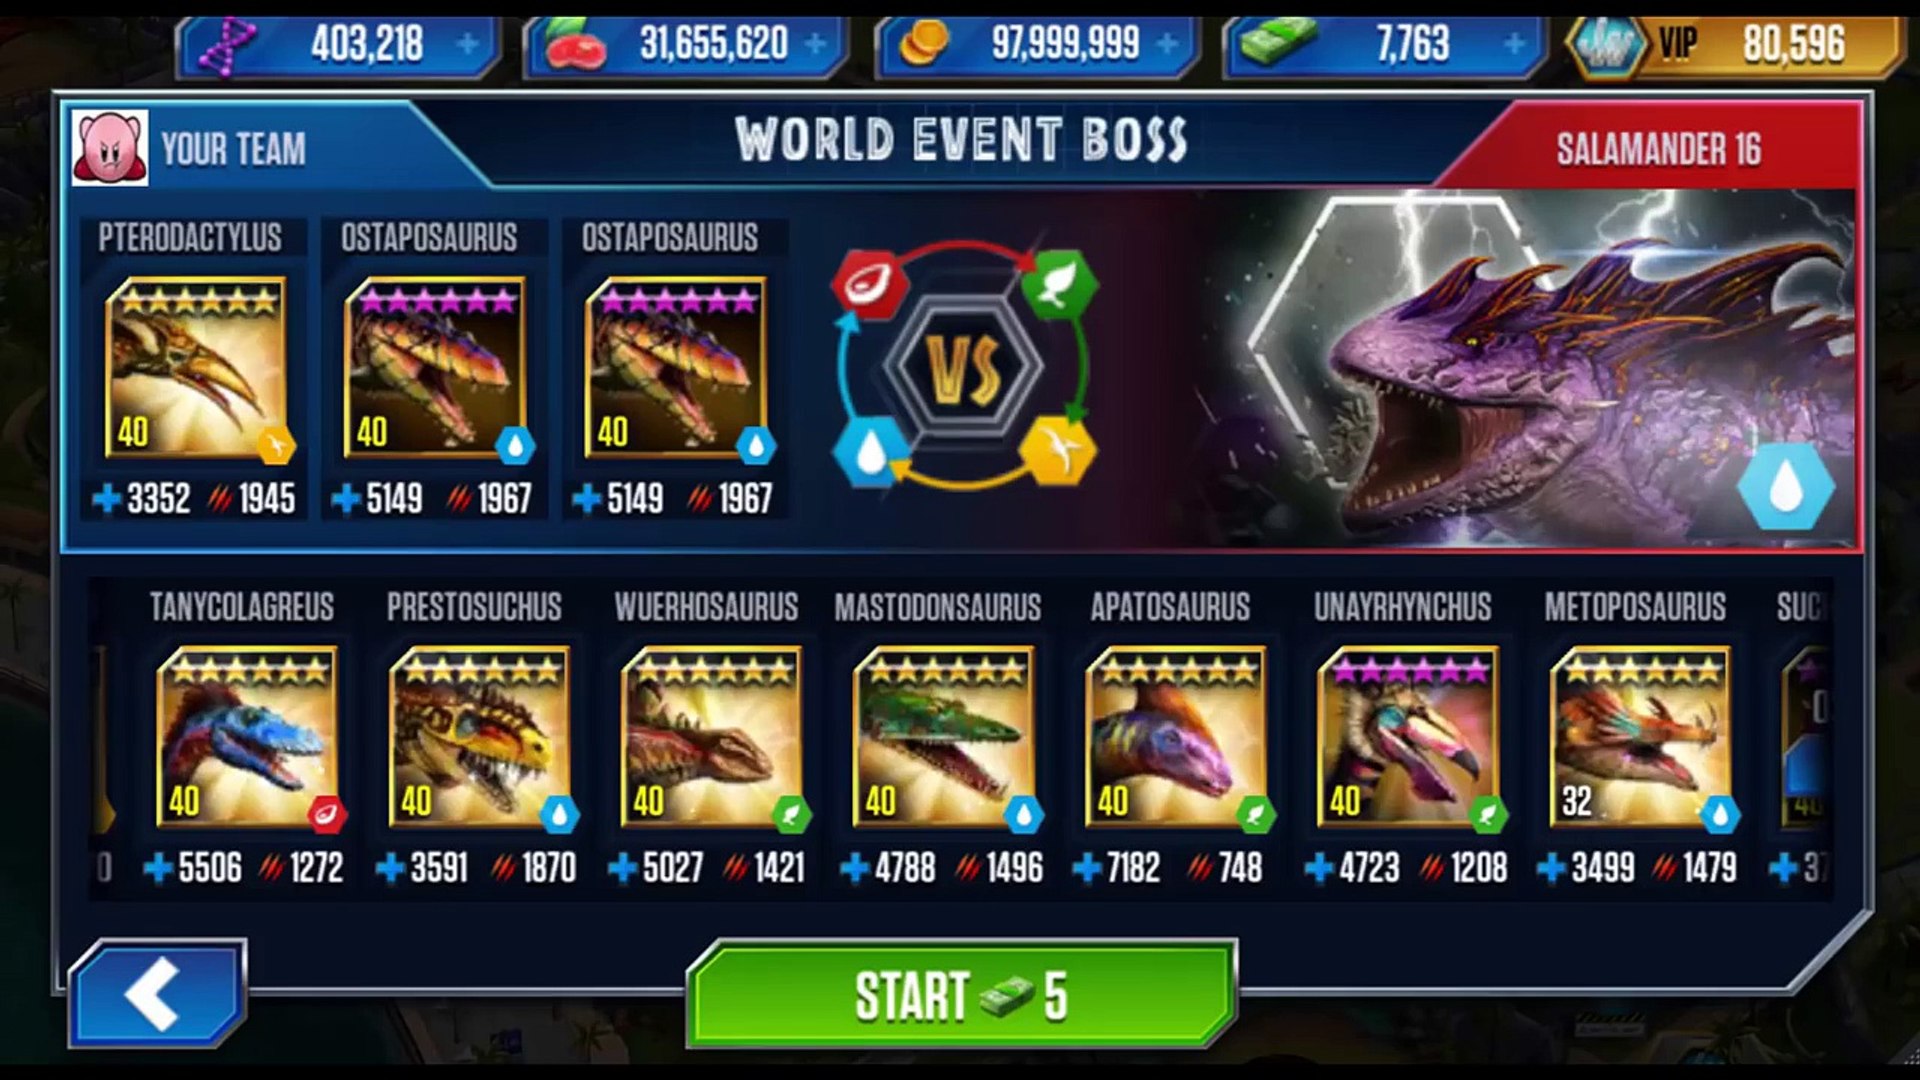 World Event Boss Salamander 16 | Jurassic World The Game